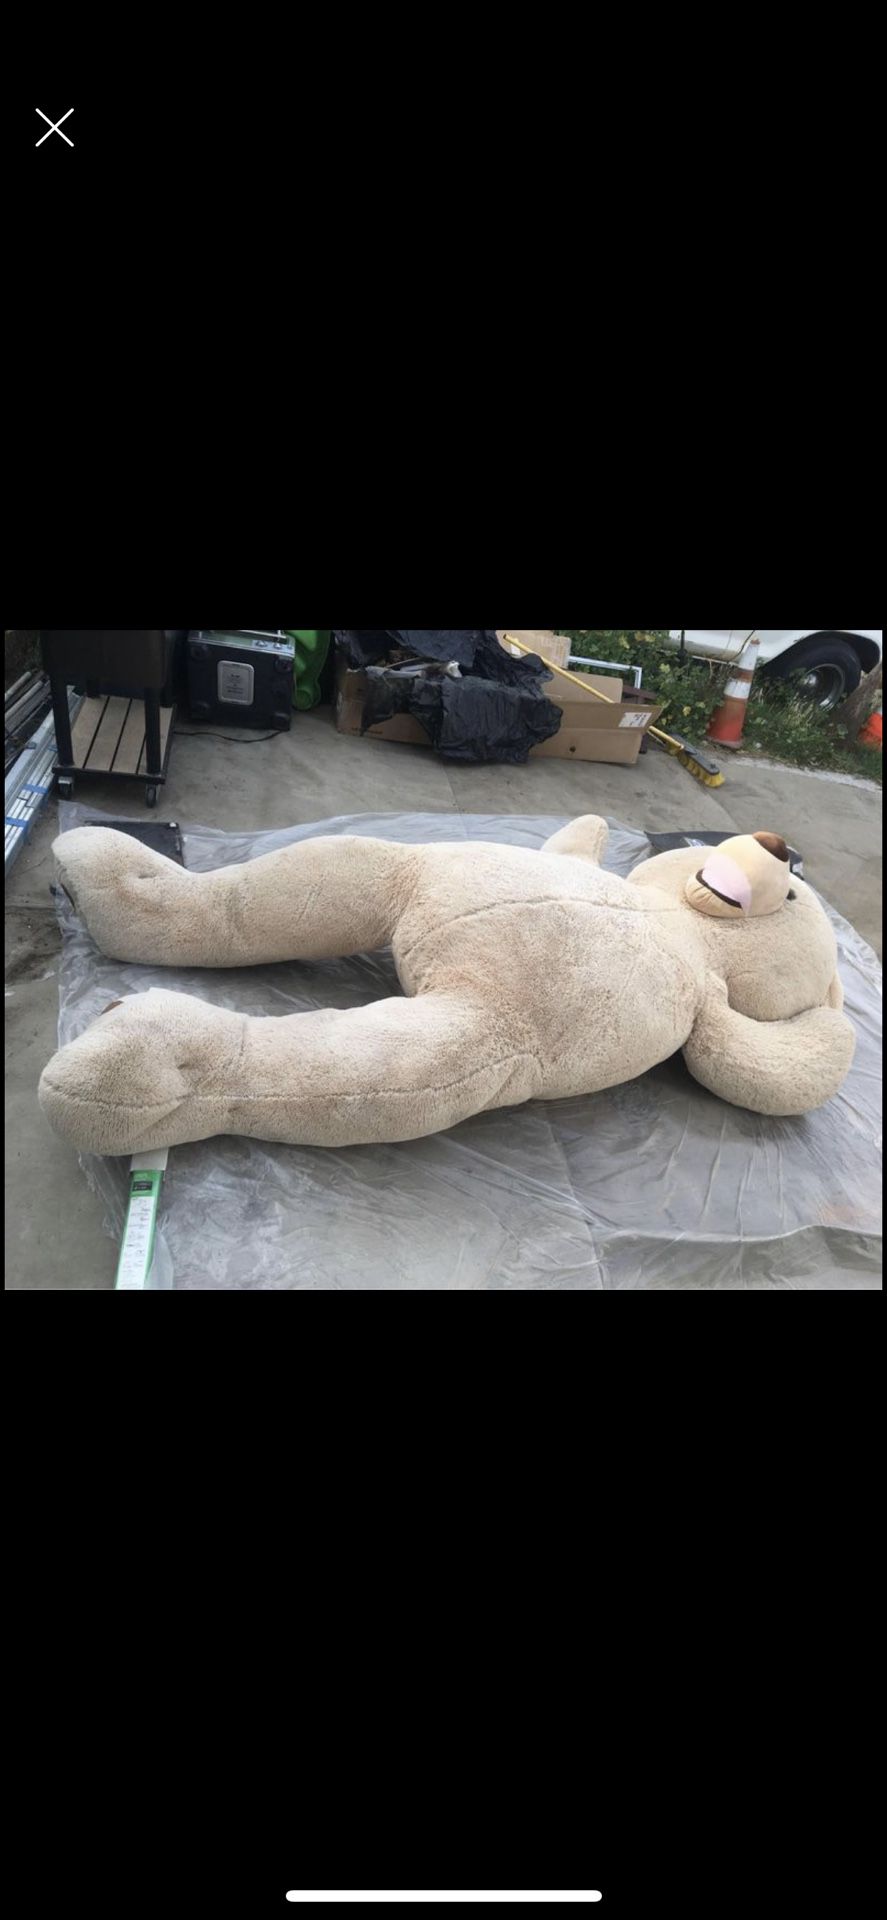 AS IS world plush toys 94" giant teddy bear stuffed animal $40 AS IS